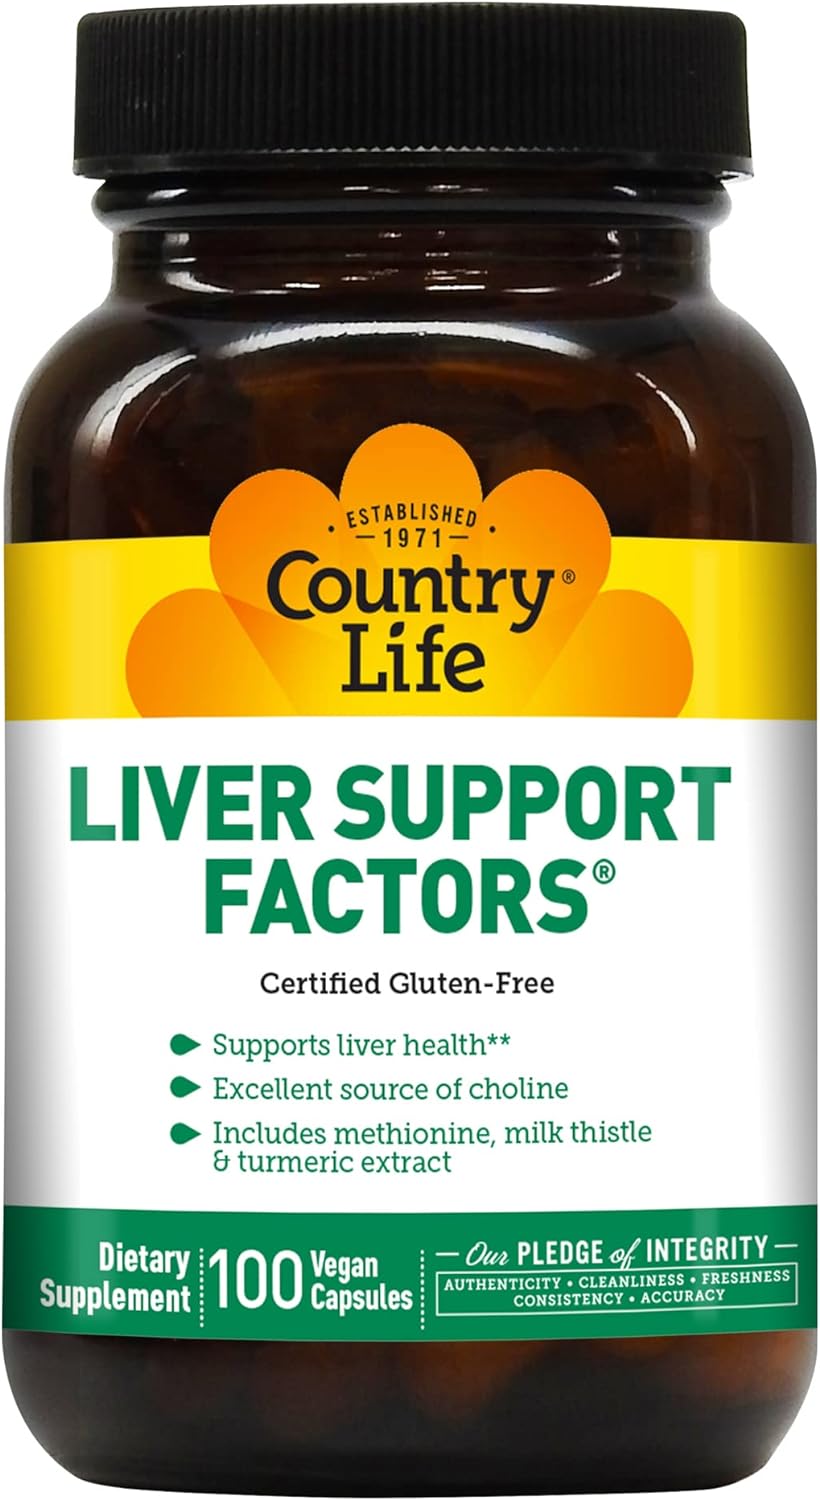 Country Life Liver Support Factors 100 Vegan Capsules, Certified Gluten Free, Certified Vegan